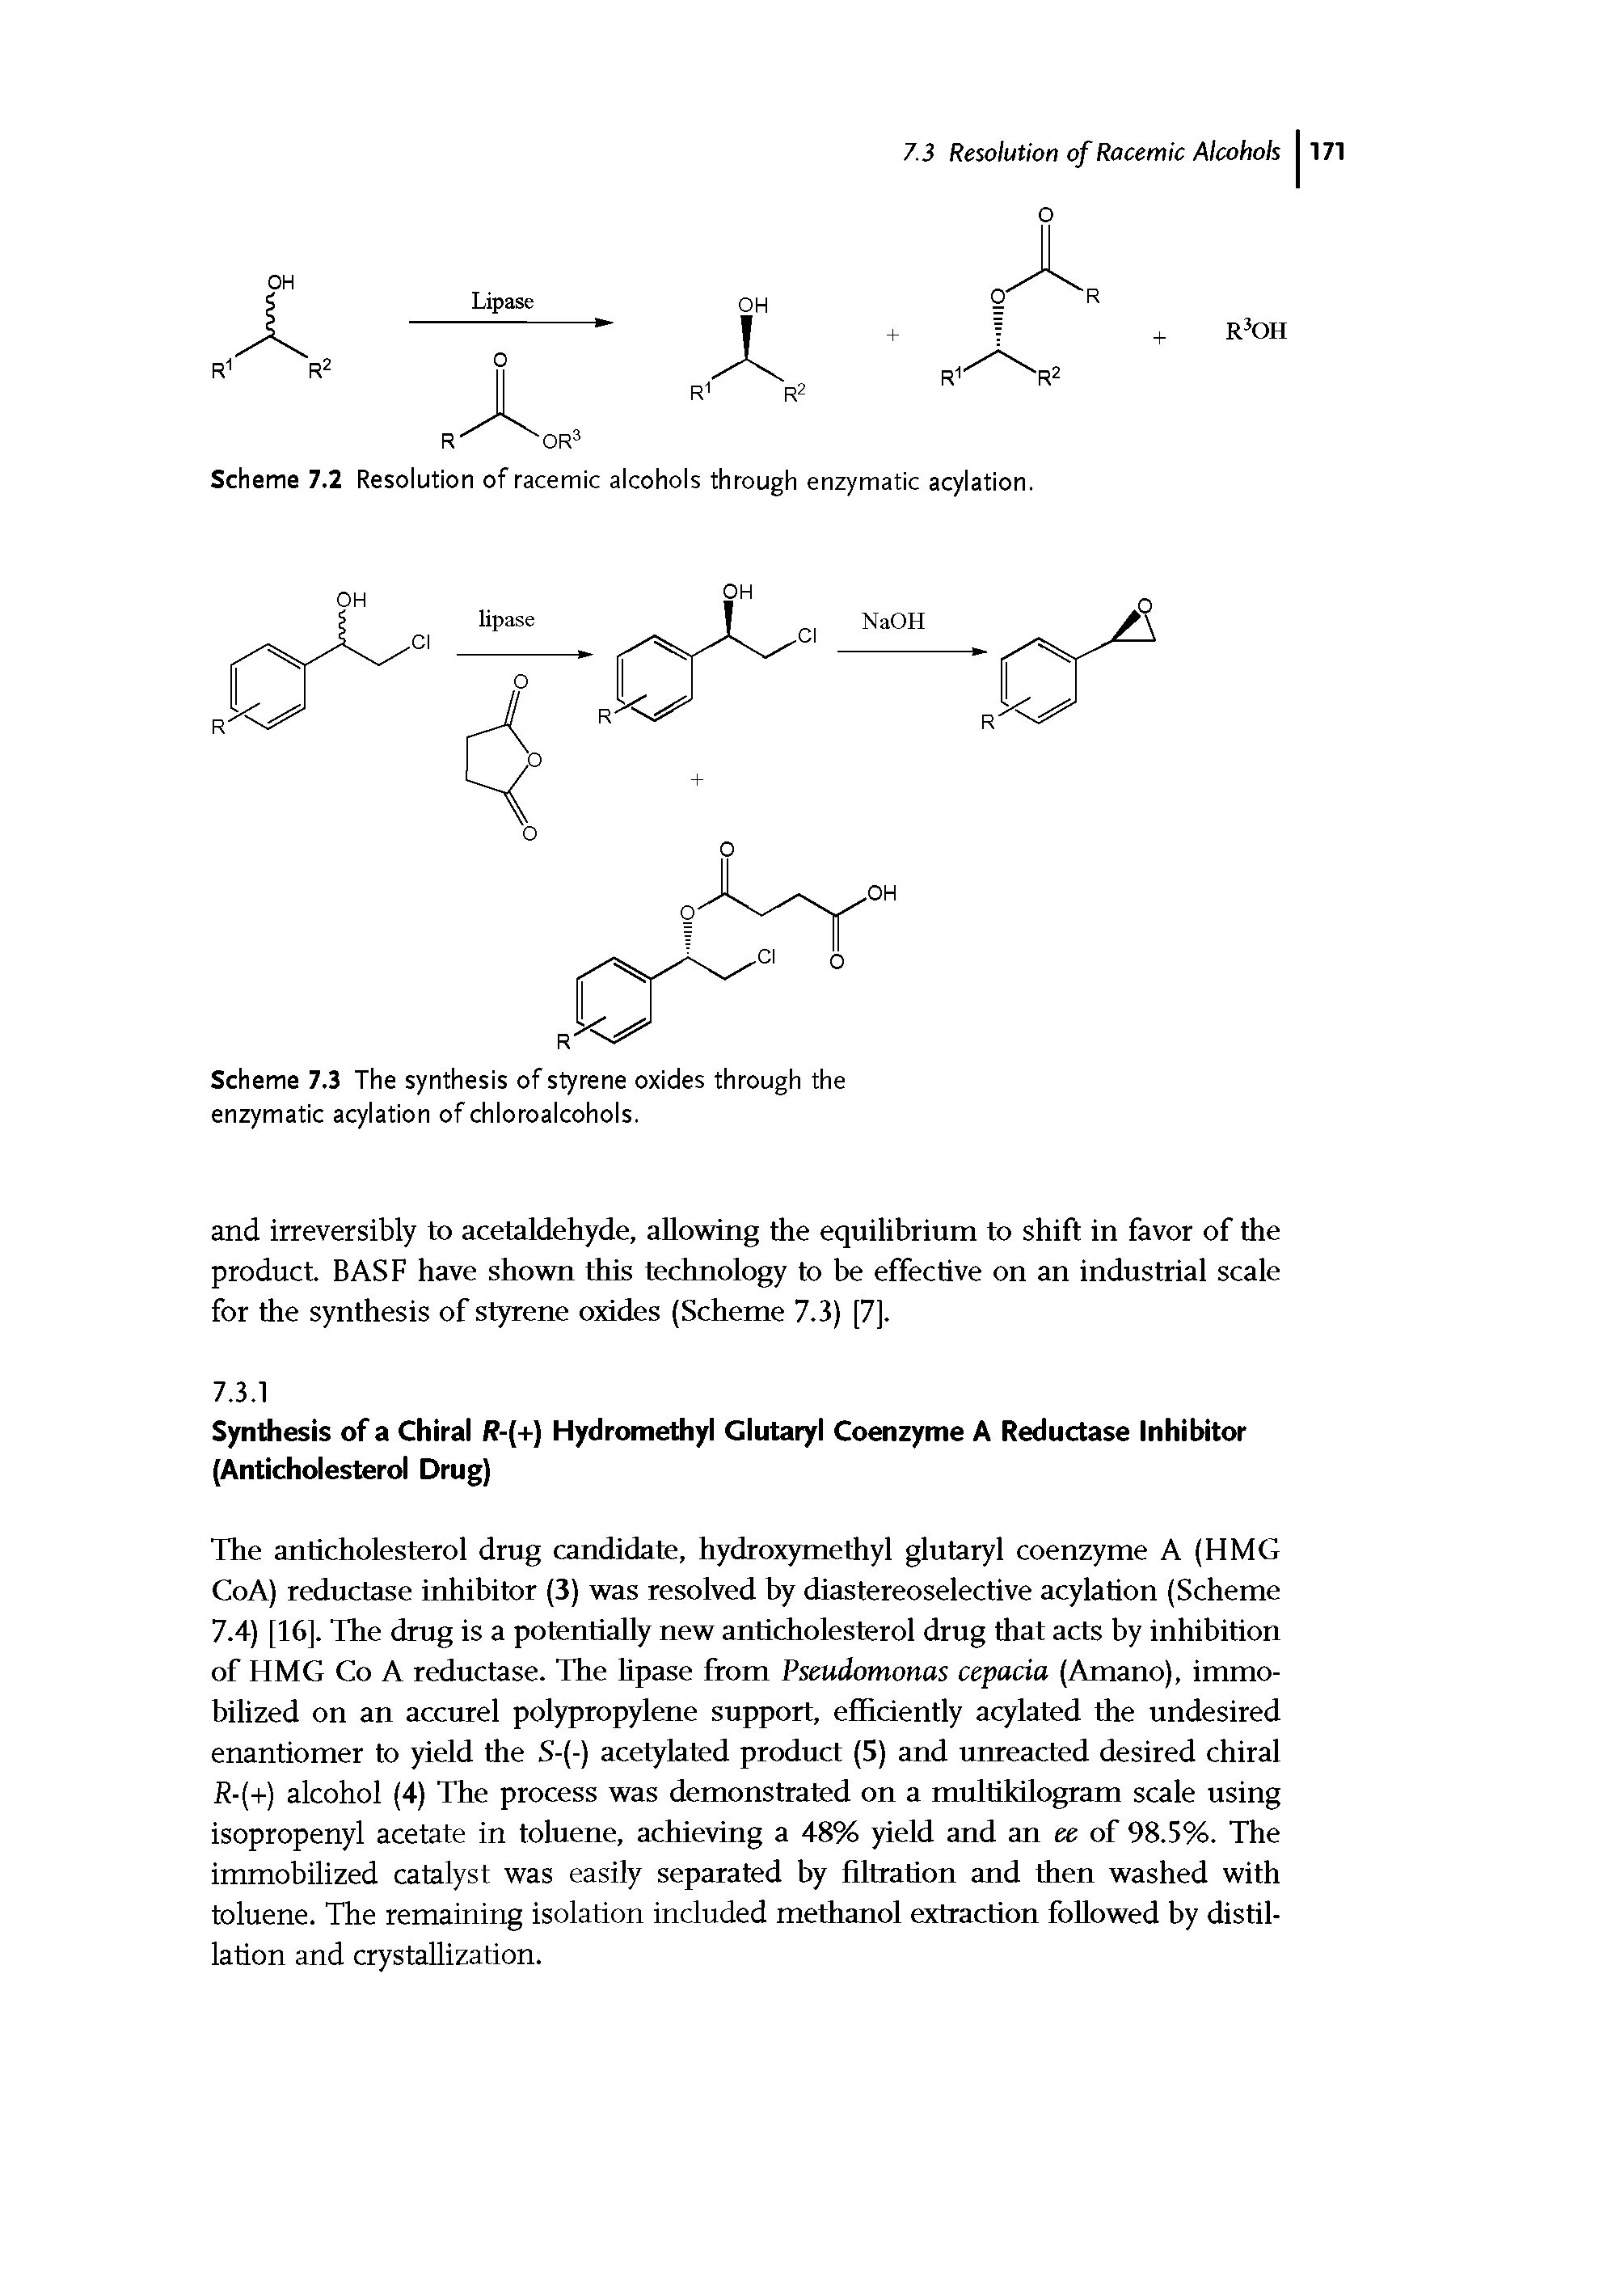 Scheme 7.3 The synthesis of styrene oxides through the enzymatic acylation of chloroalcohols.